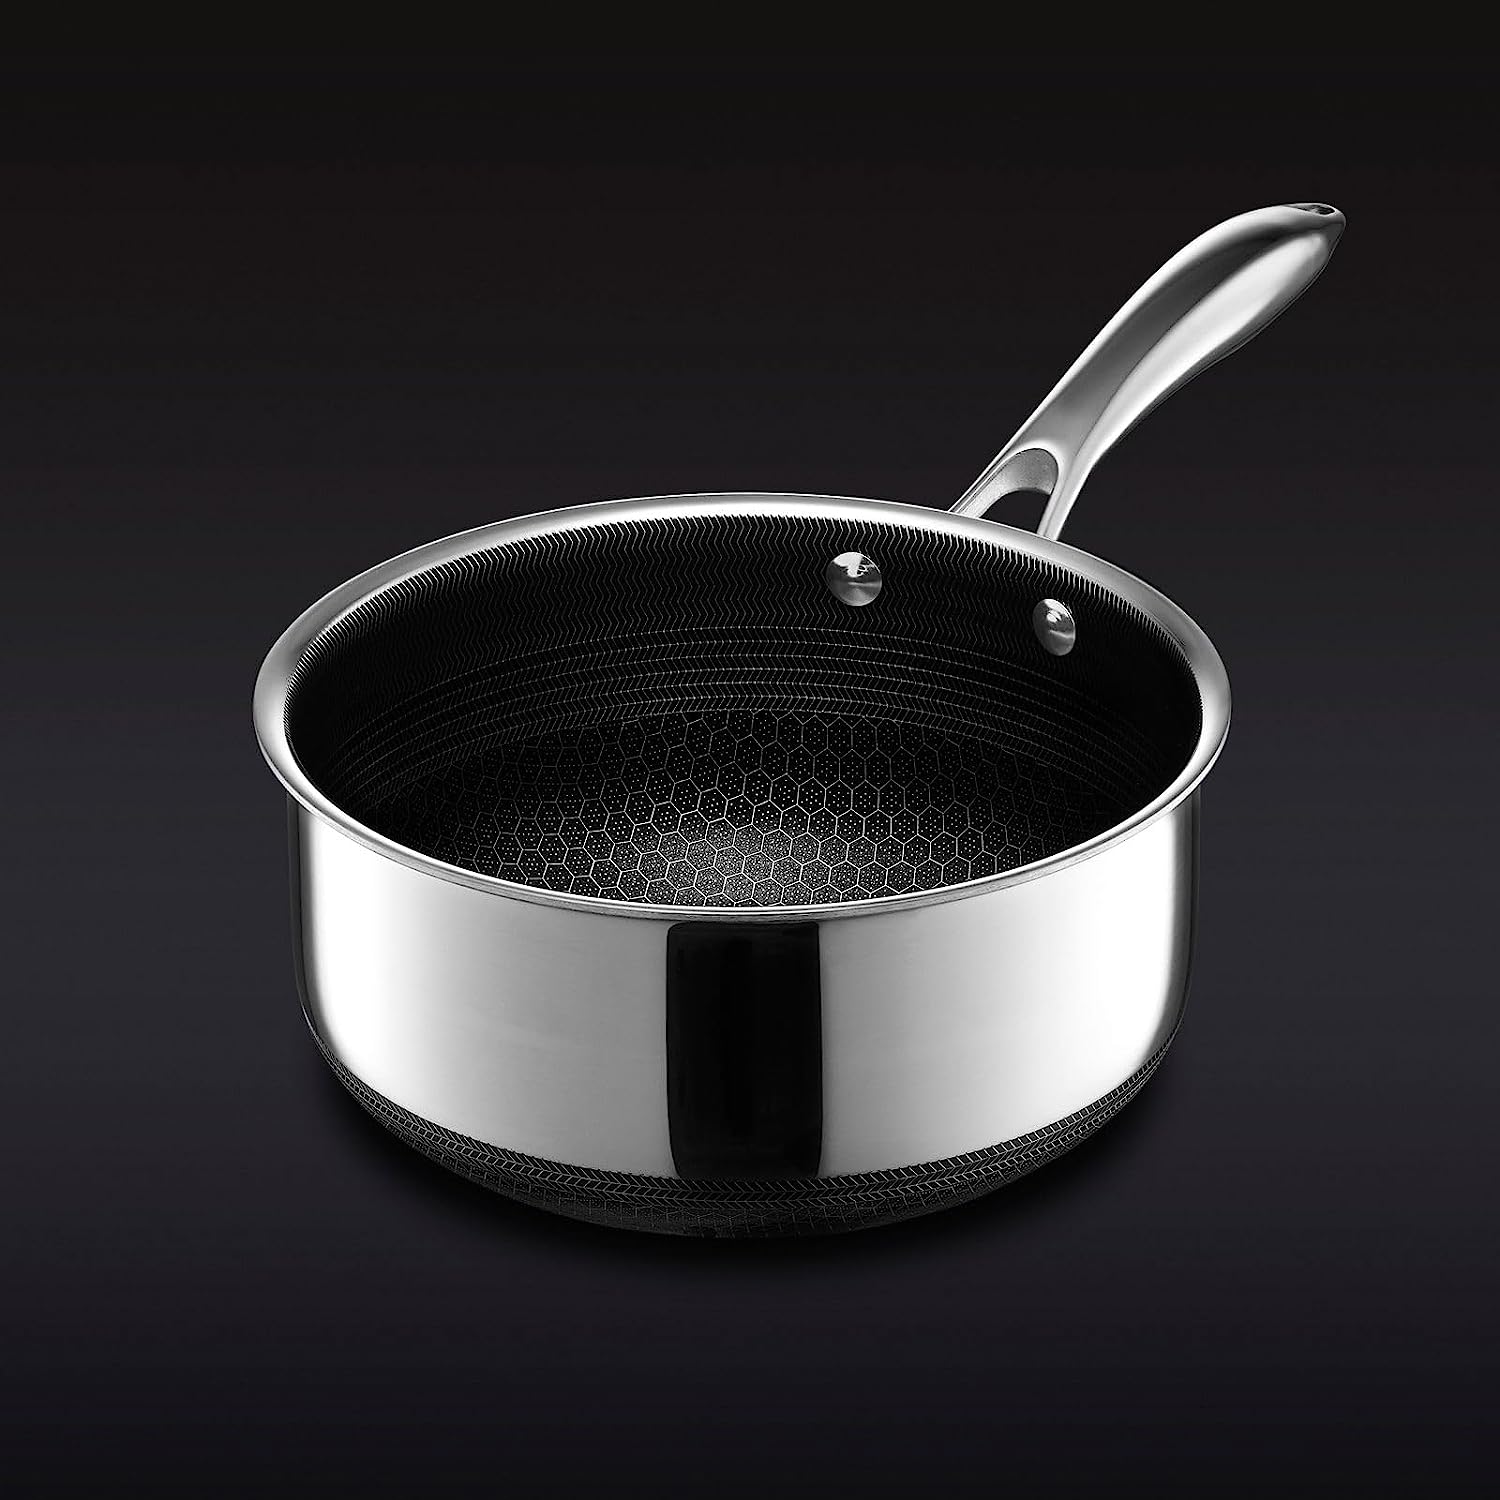 HexClad Like Hybrid Stainless Steel 11 Inch Frying Pan